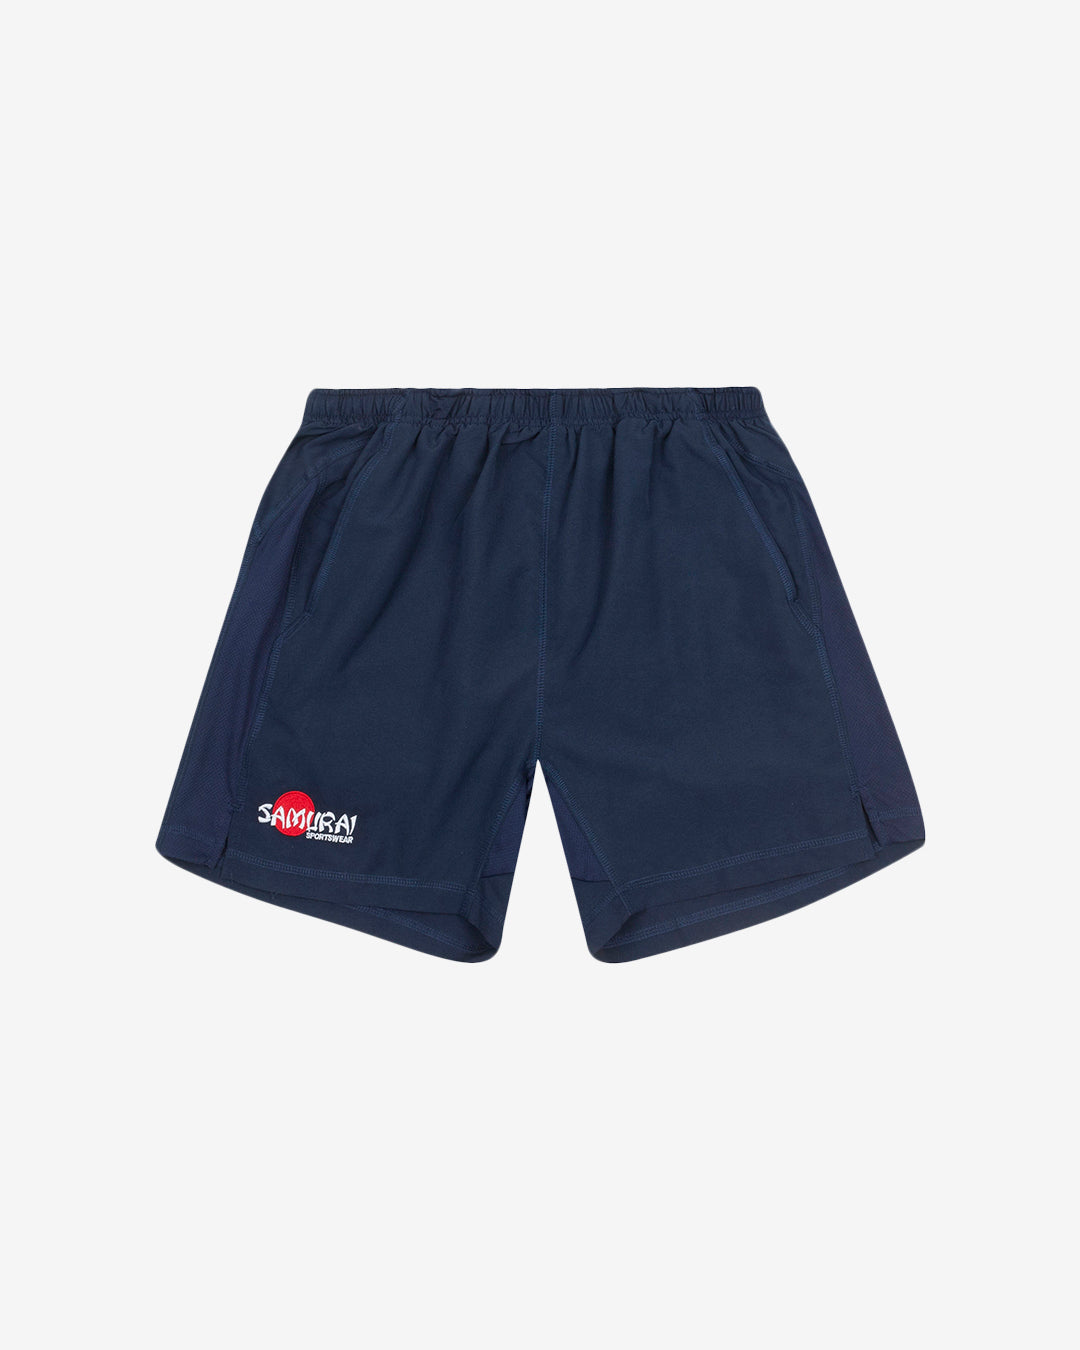 Hc: 9606 - Clipper Shorts - Navy